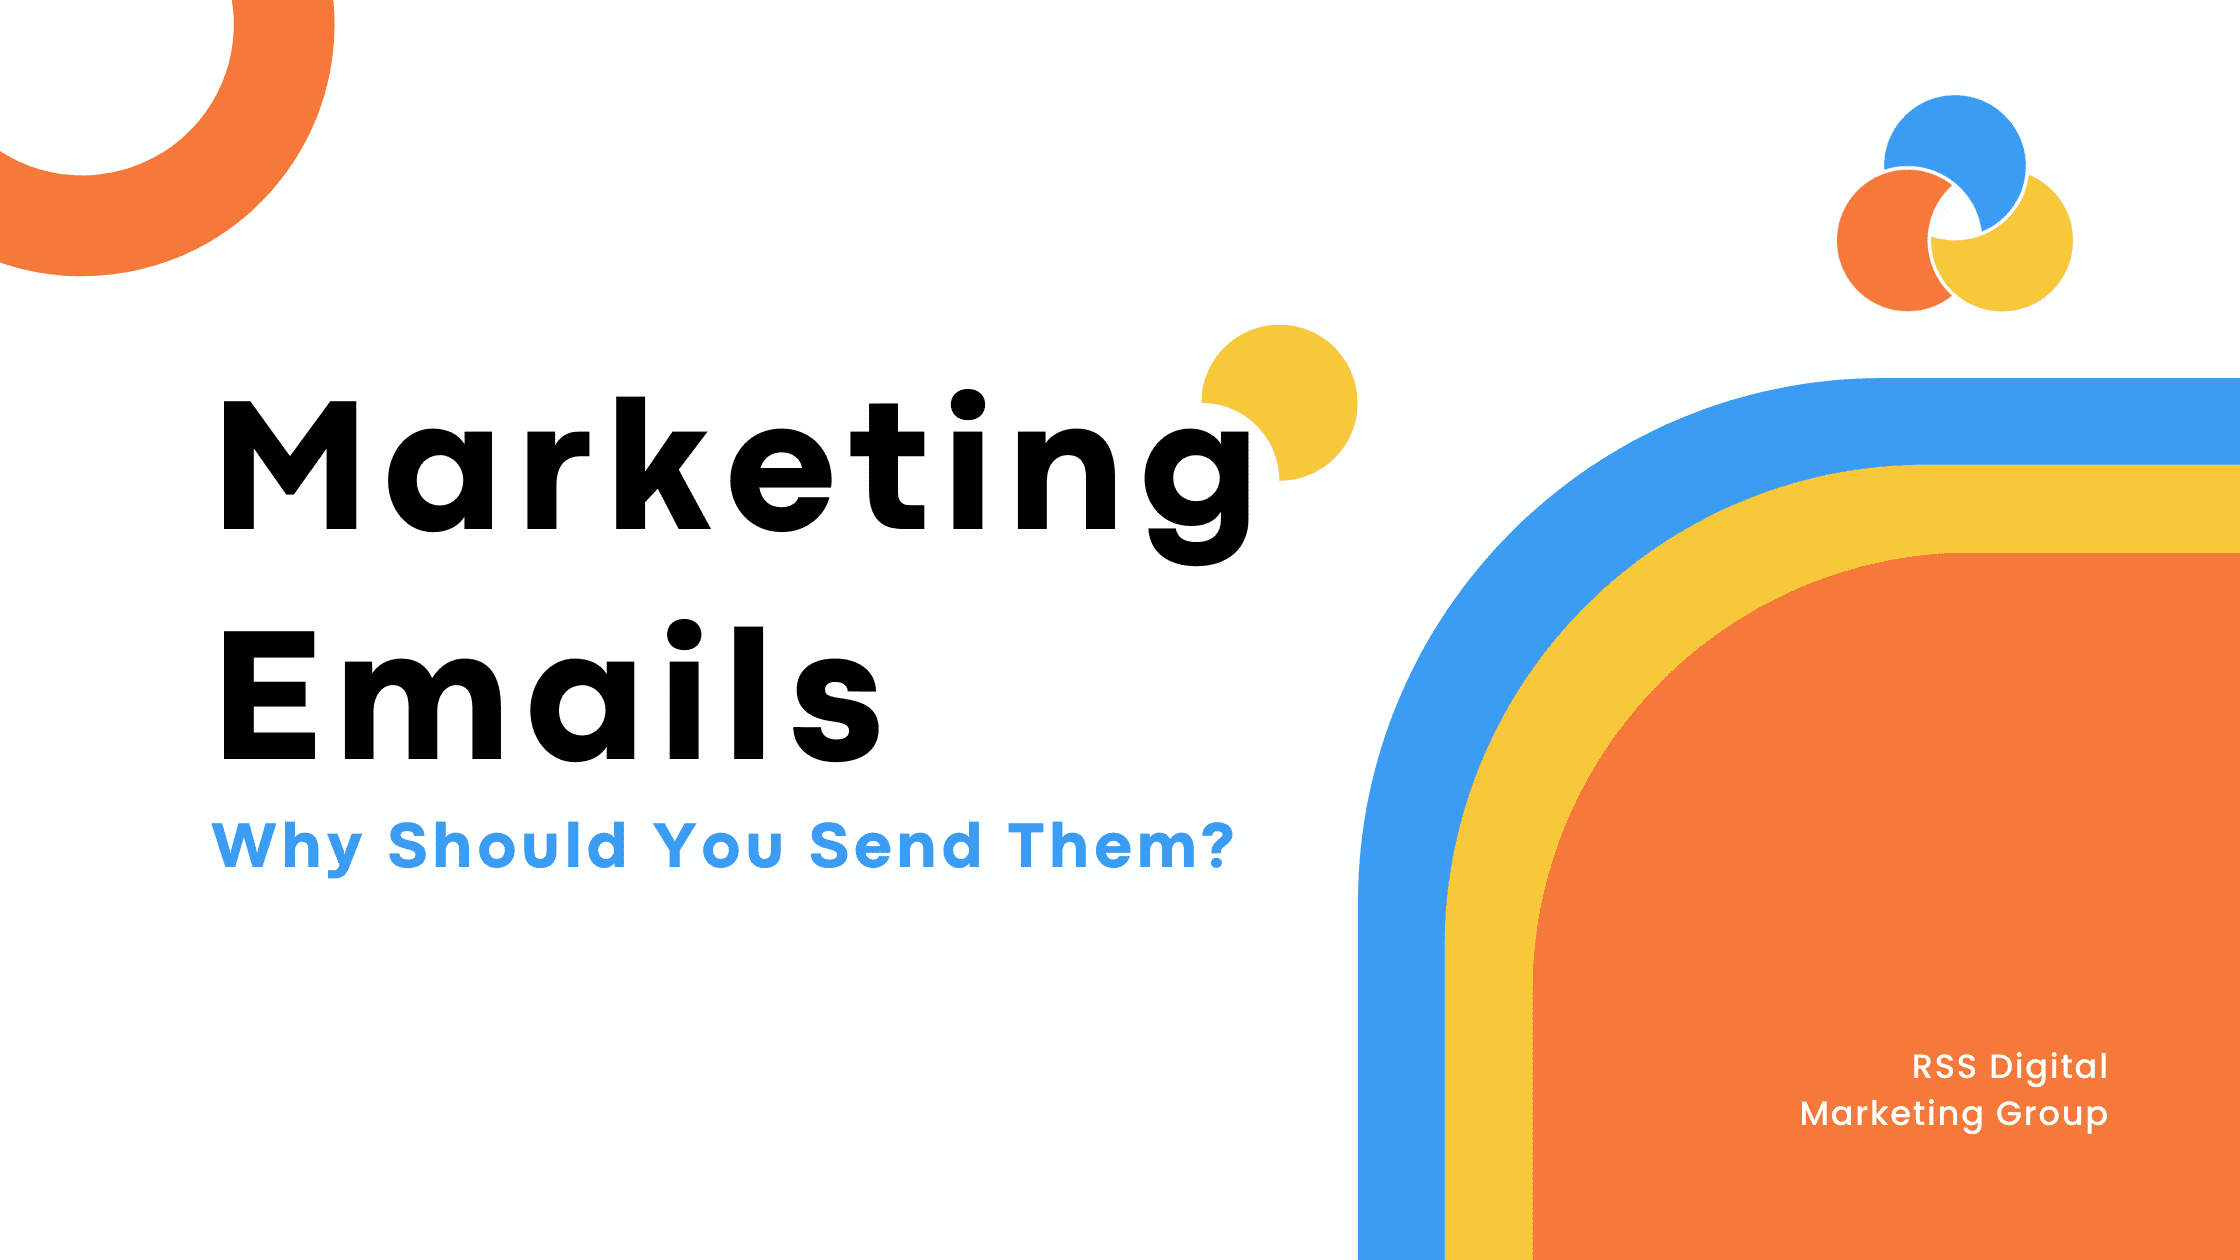 Send Marketing Emails